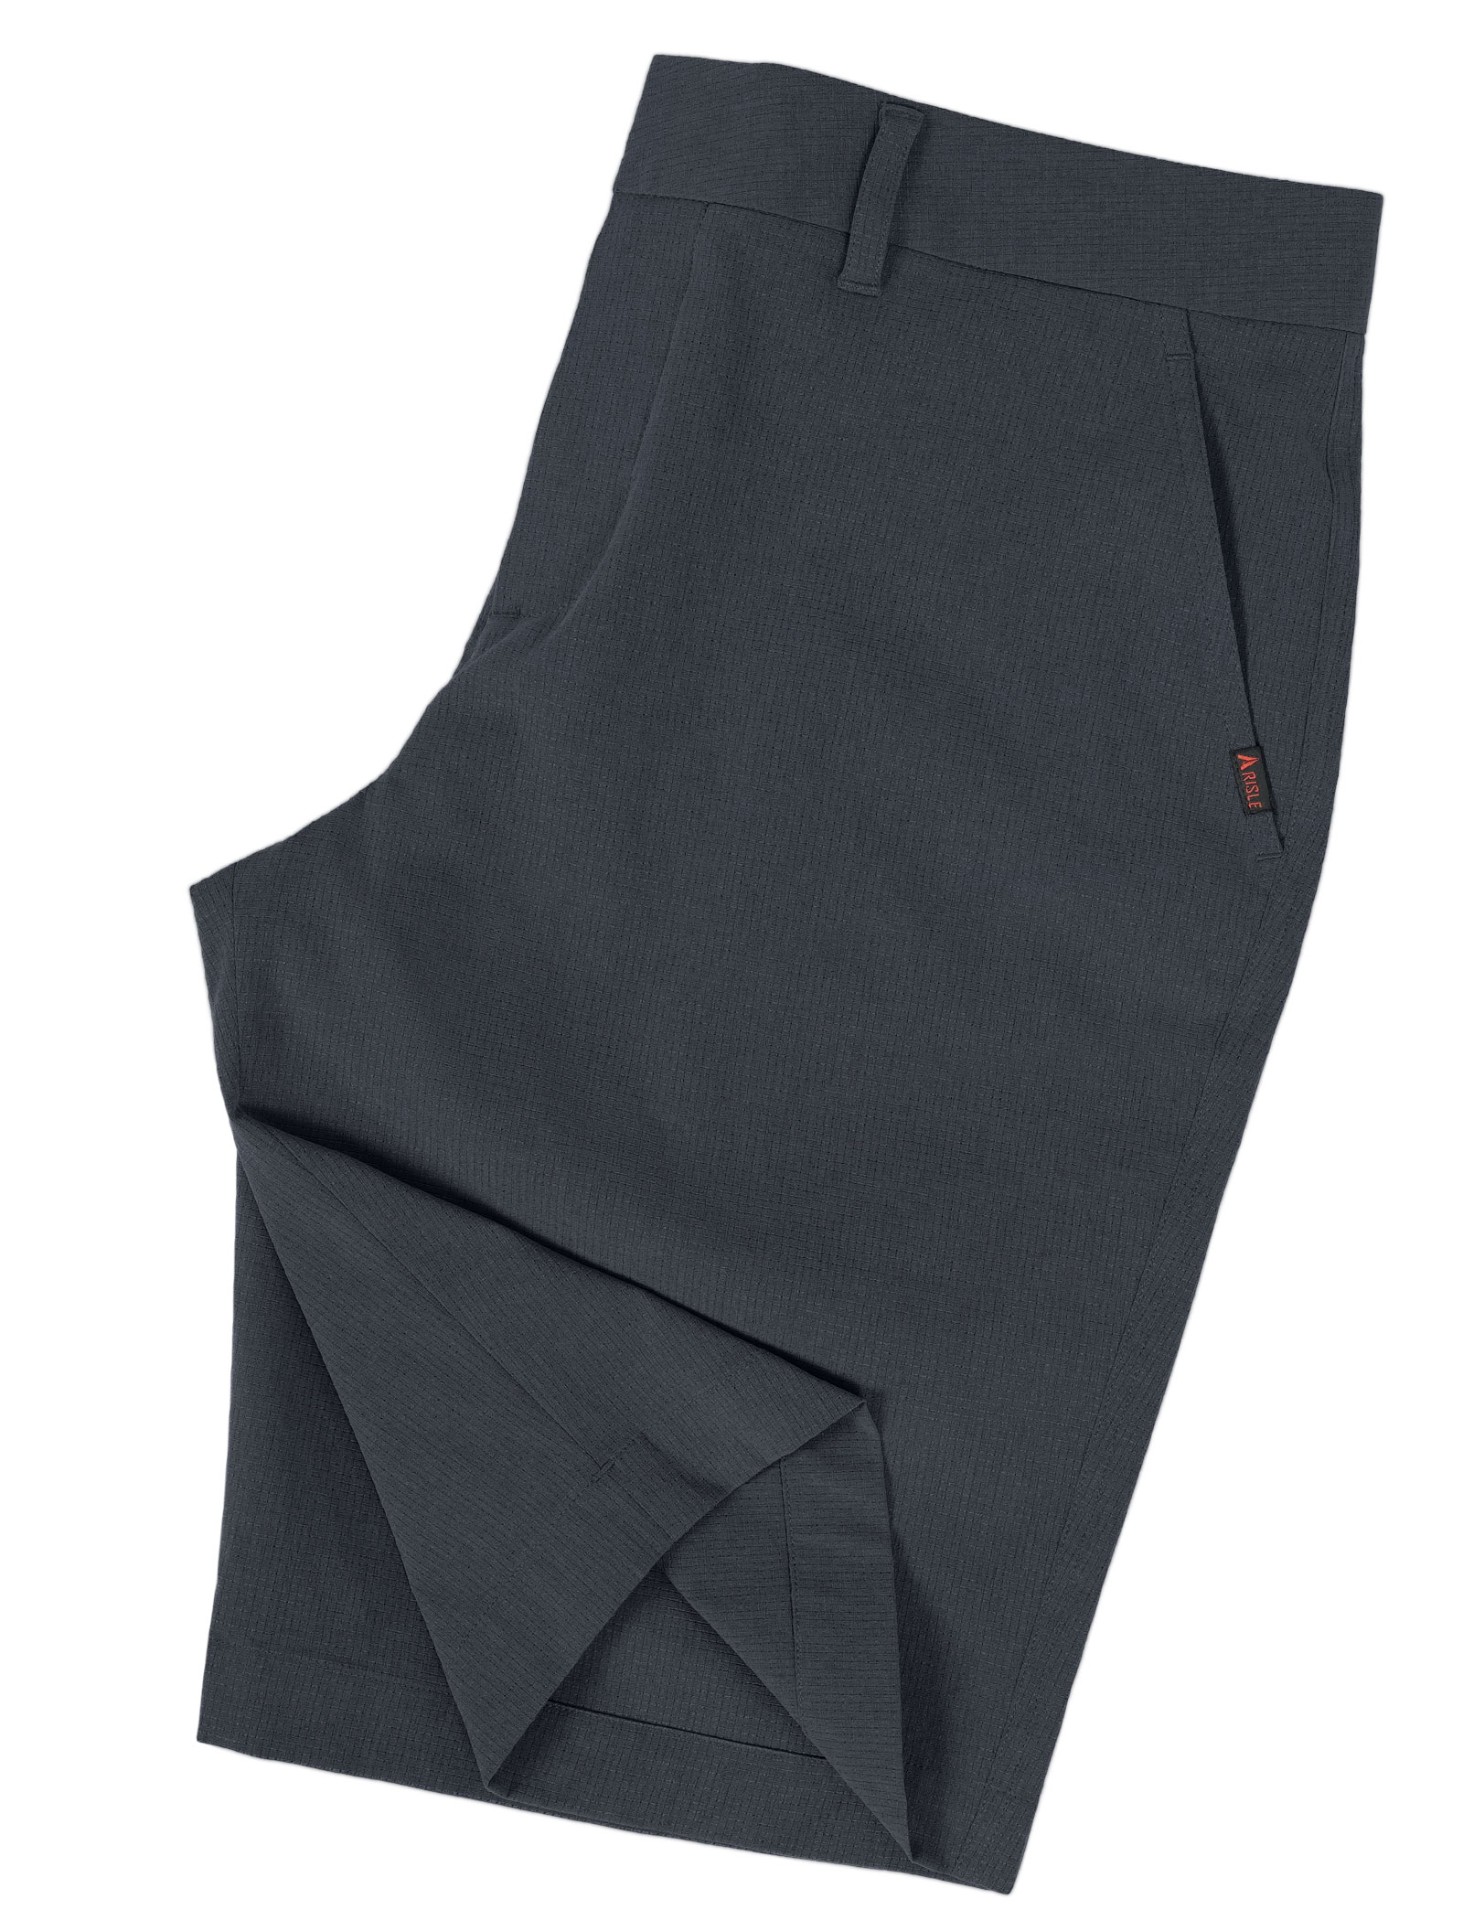 Quần Shorts Golf ARISLE Ventcool Charcoal Grey